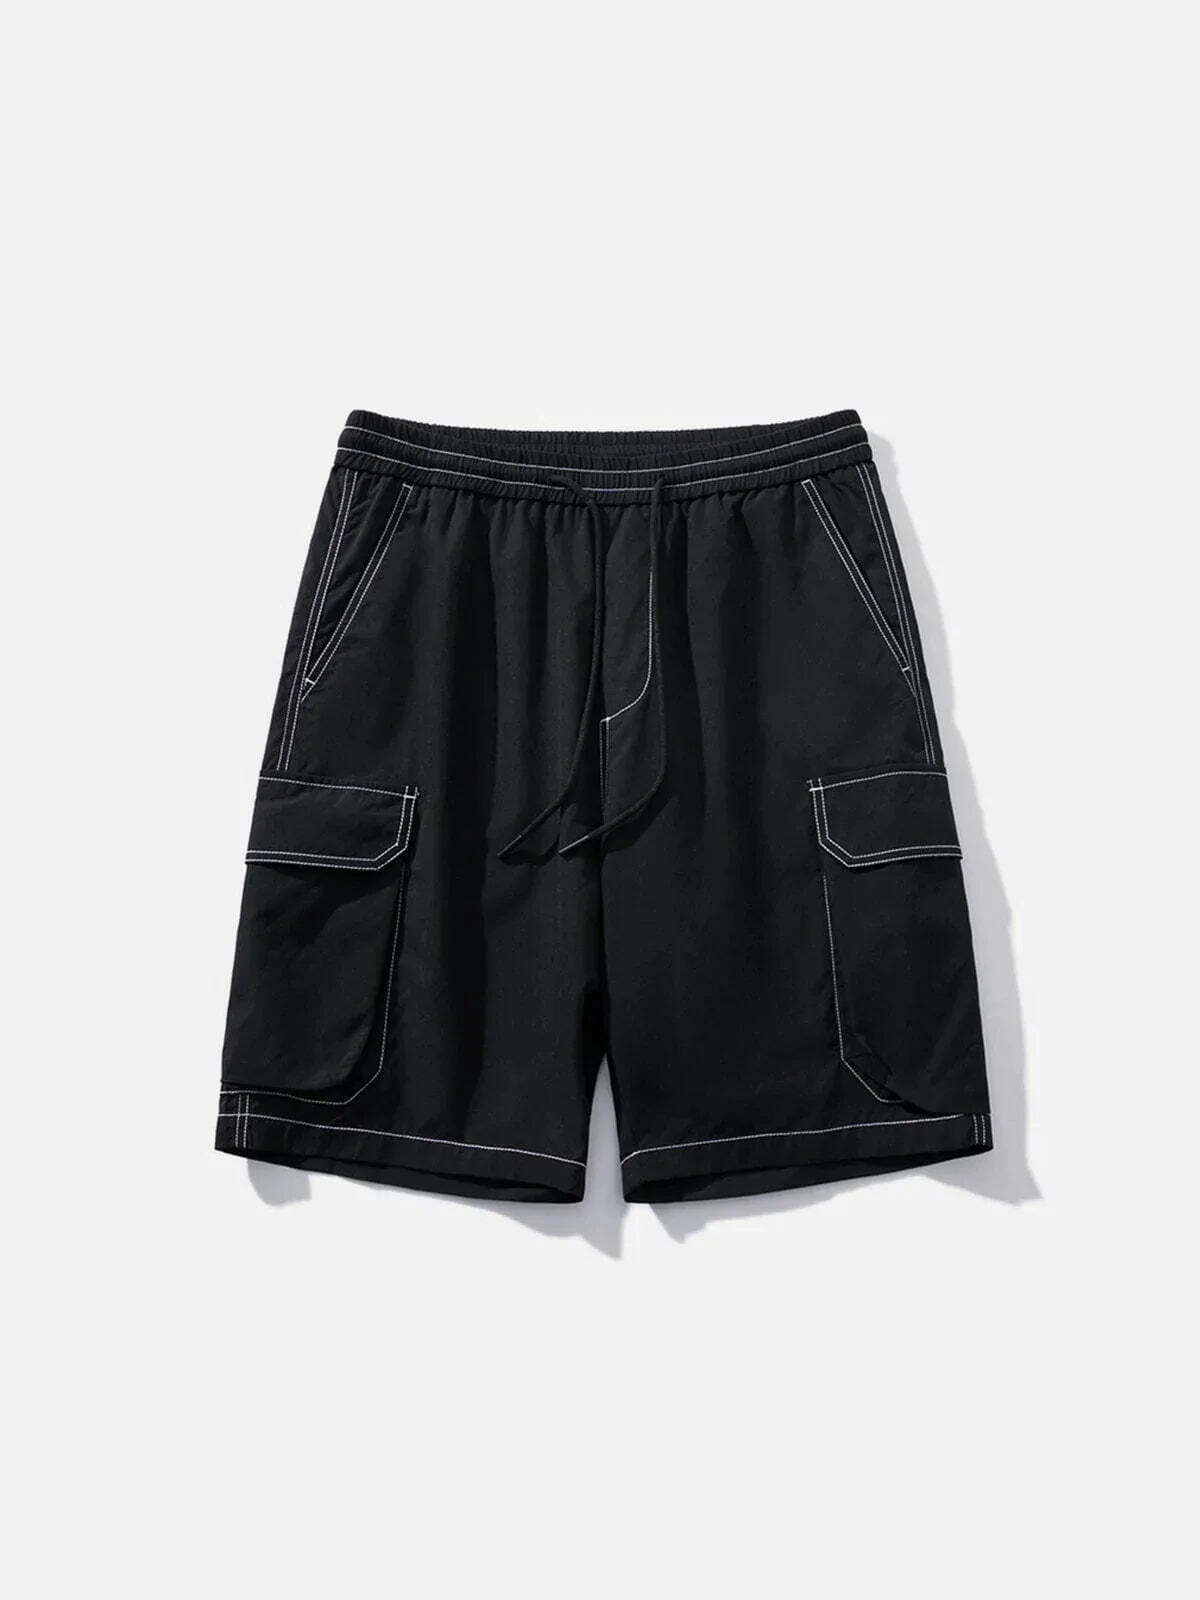 denim pocket panel shorts edgy streetwear essential 7116